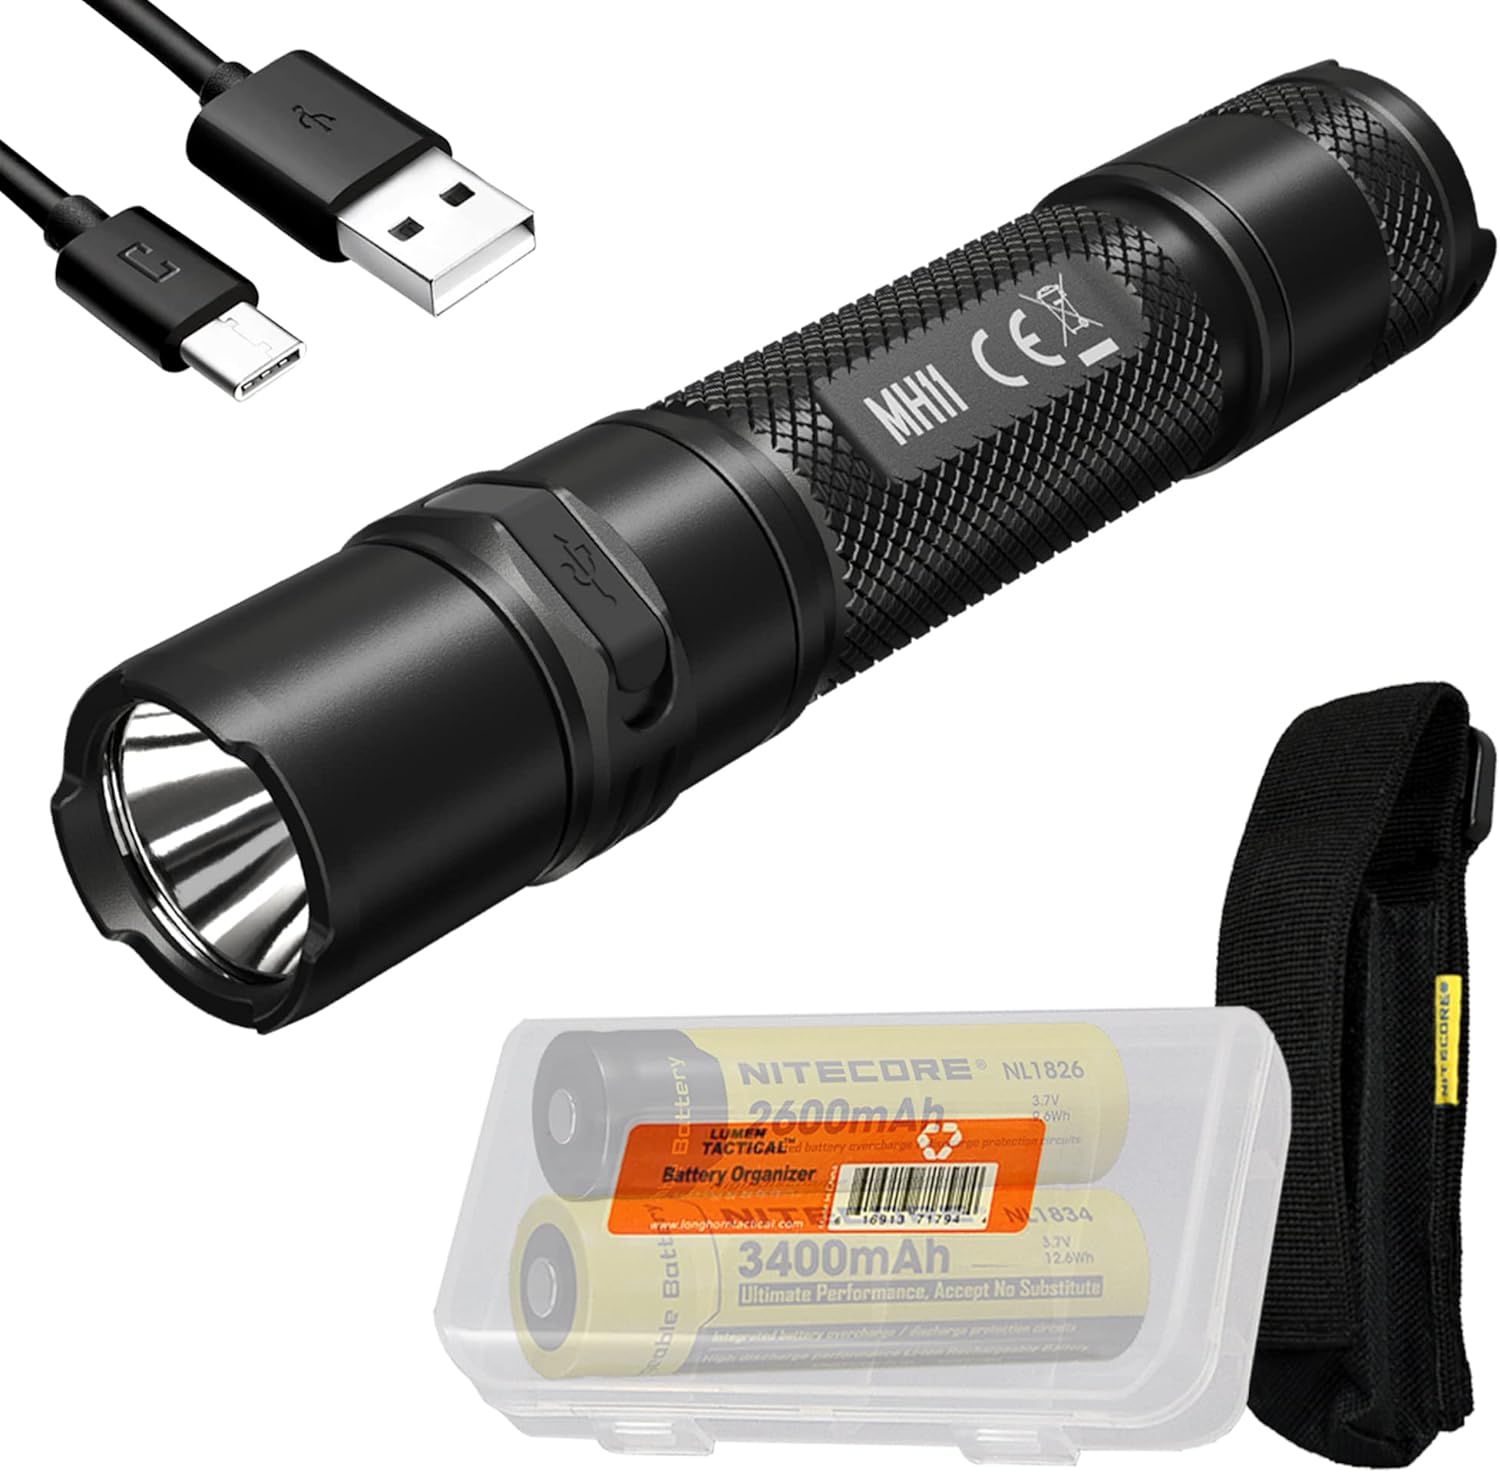 HATORI LED Mini Flashlight, Bright Small Handheld Pocket Flashlights  Tactical High Lumens Pen Light for Camping, Outdoor, Emergency, 1  Pack(3.55Inch)